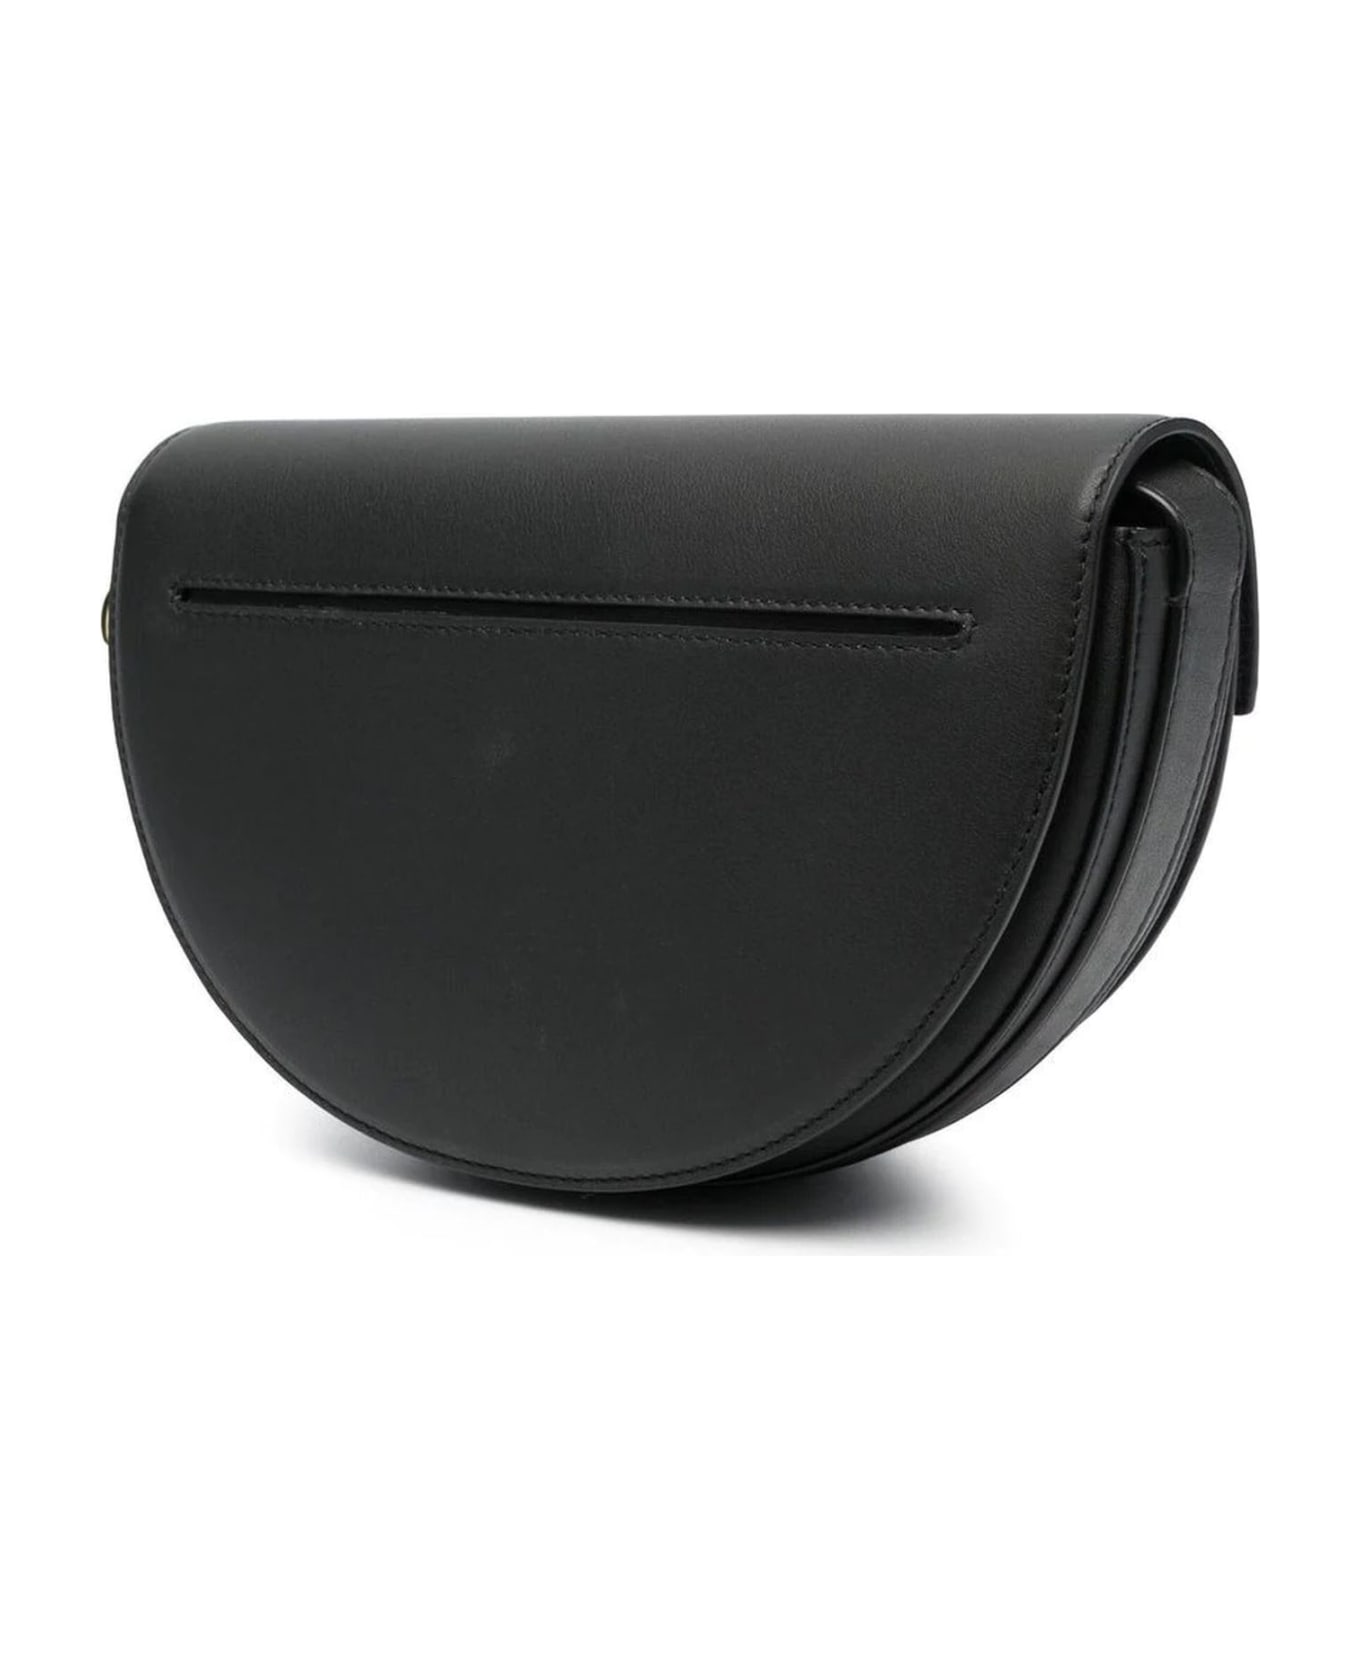 Patou Black Leather Handbag - Black